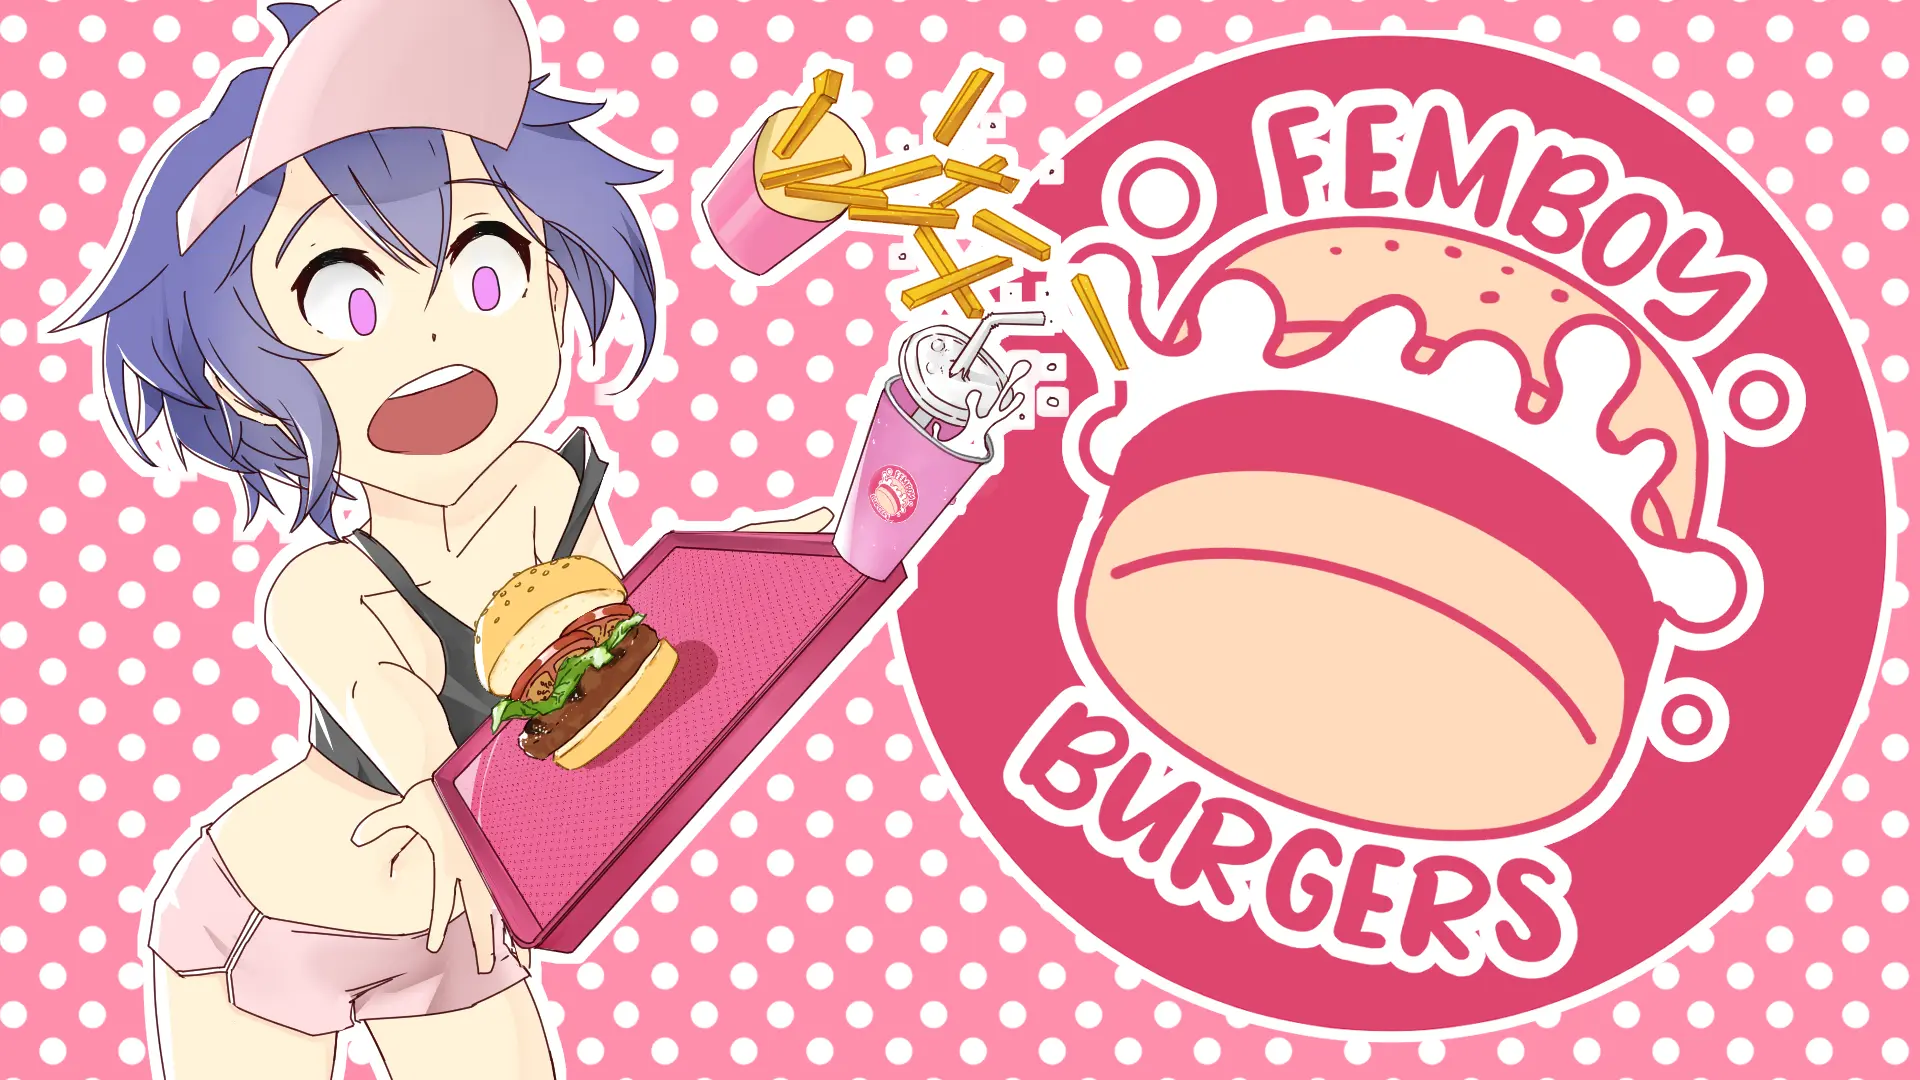 Femboy Burgers main image